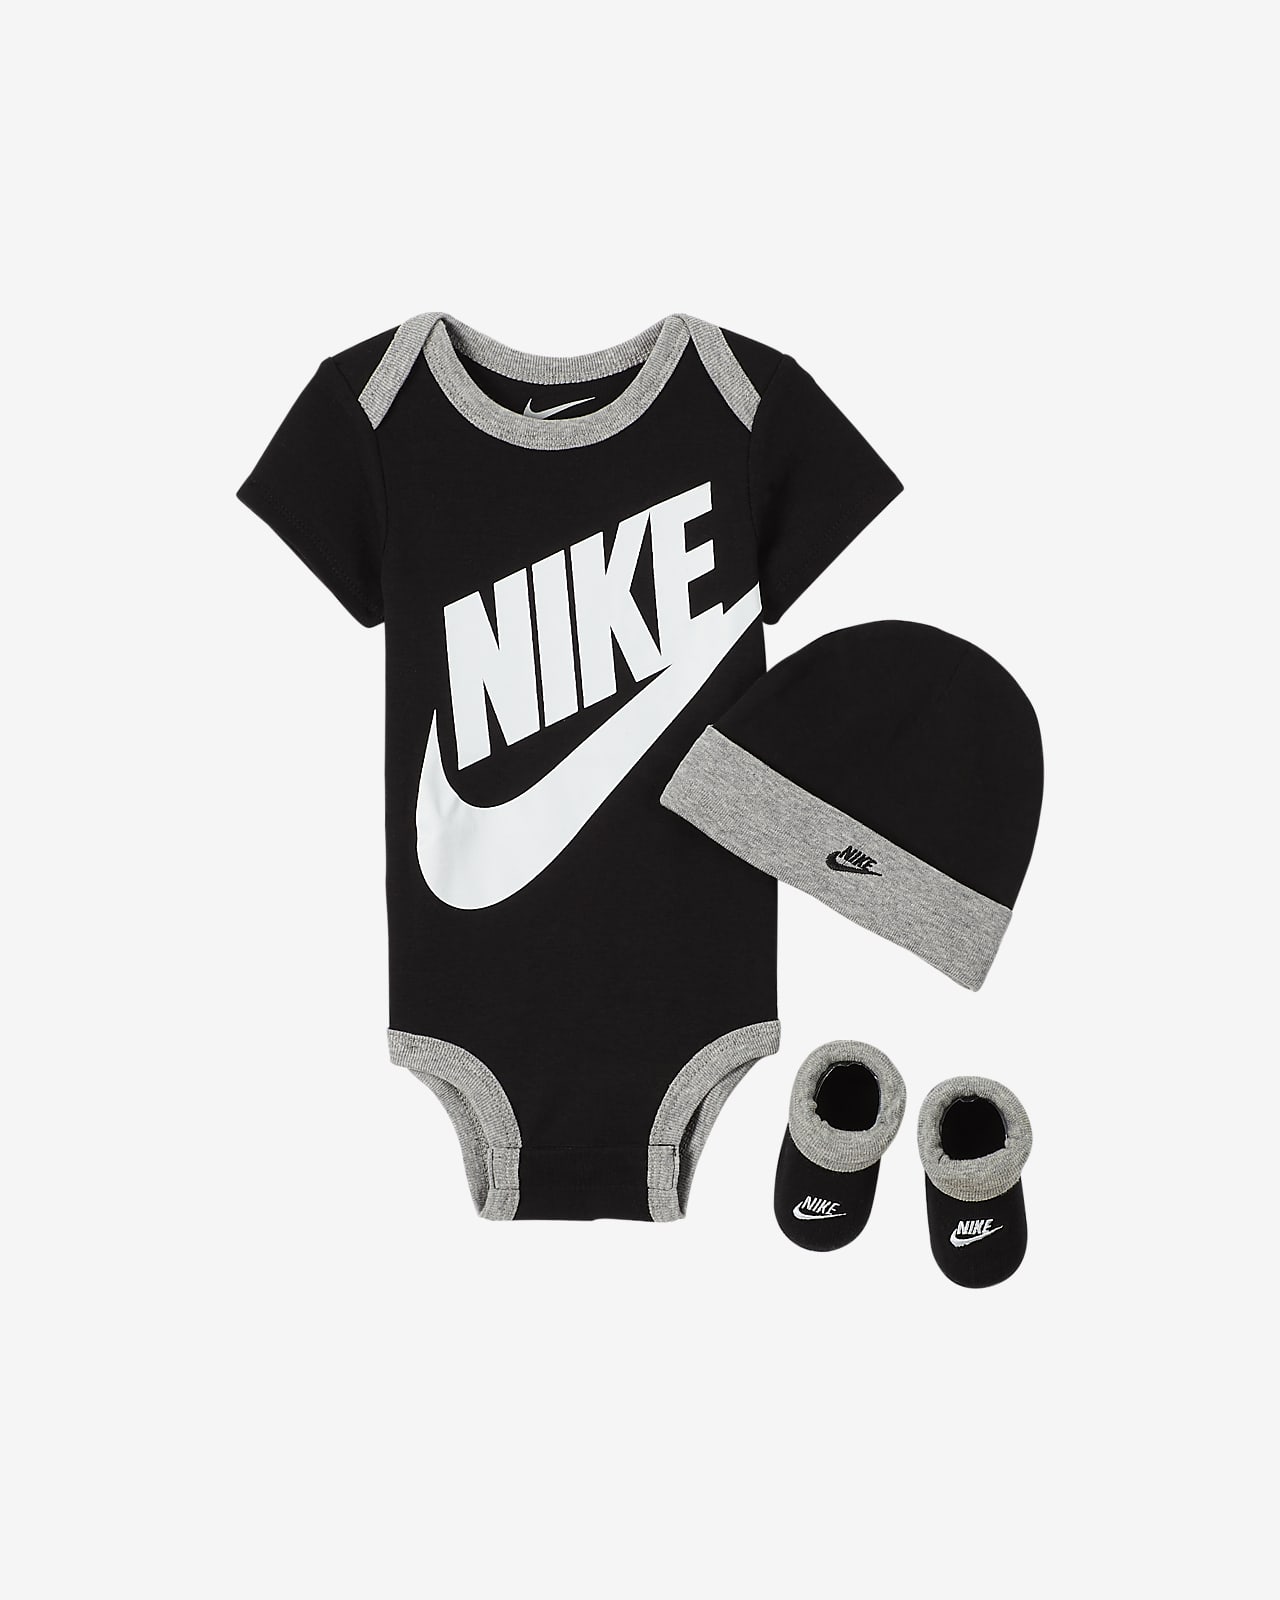 svinekød afbryde At accelerere Nike Baby (0-6M) 3-Piece Set. Nike JP